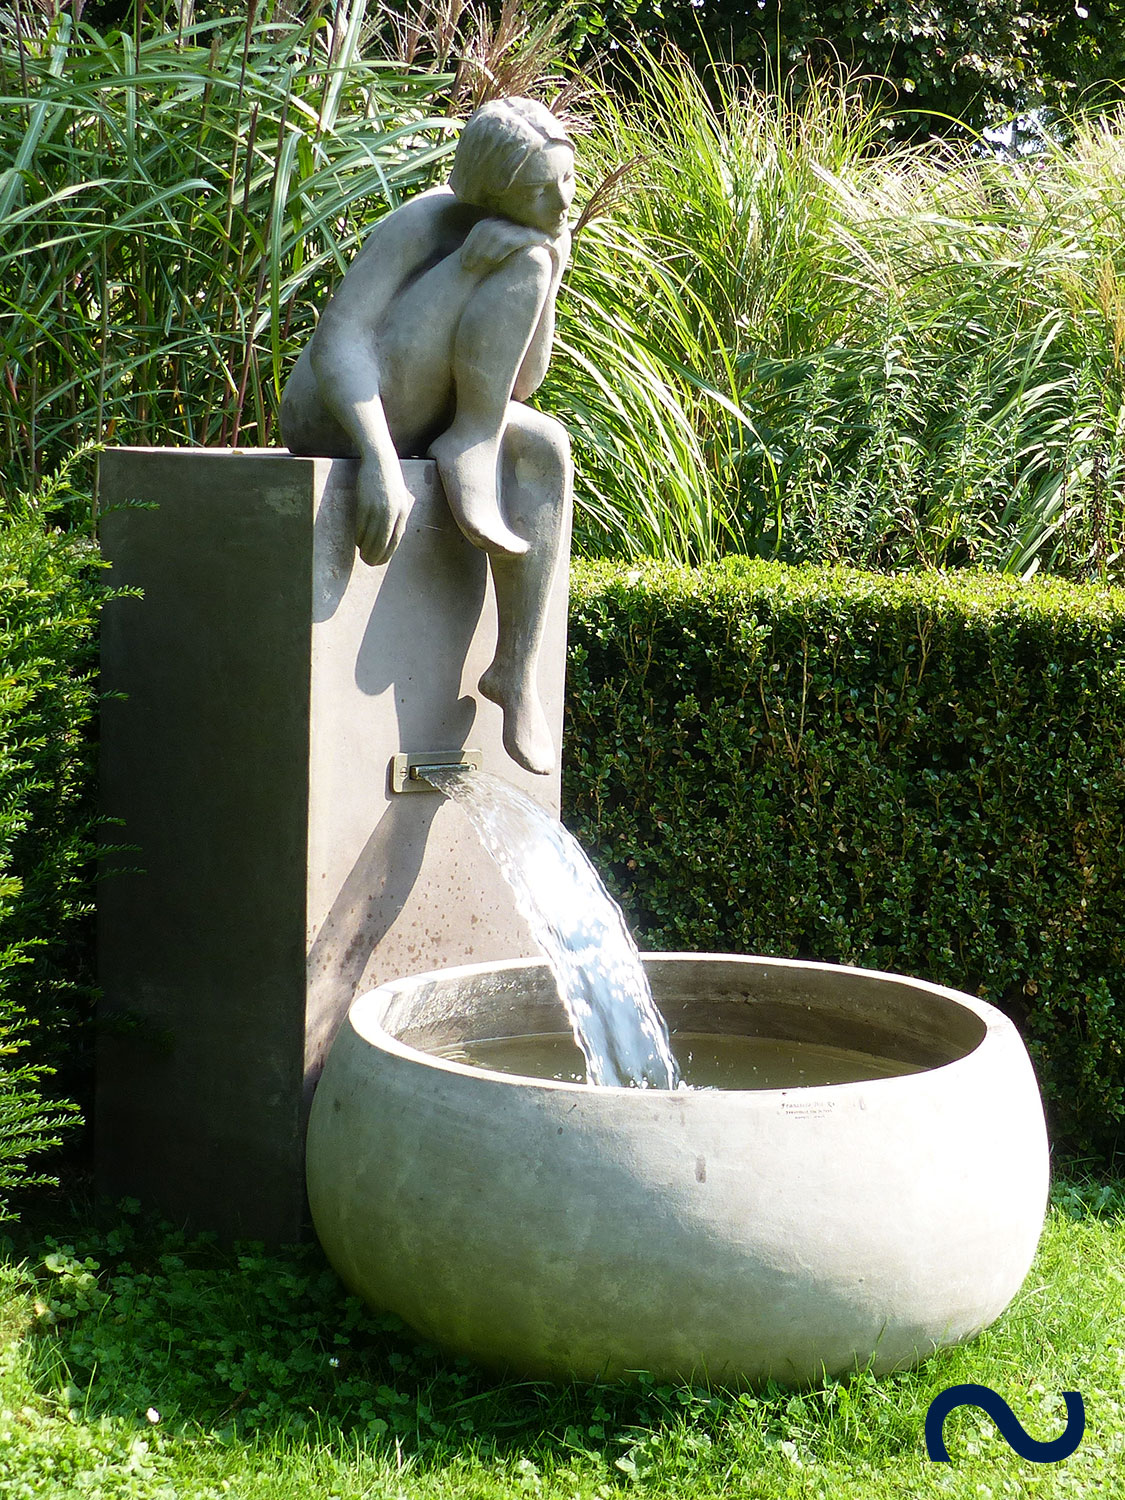 Gartenbrunnen Springbrunnen Theresa Slink Ideen Mit Wasser